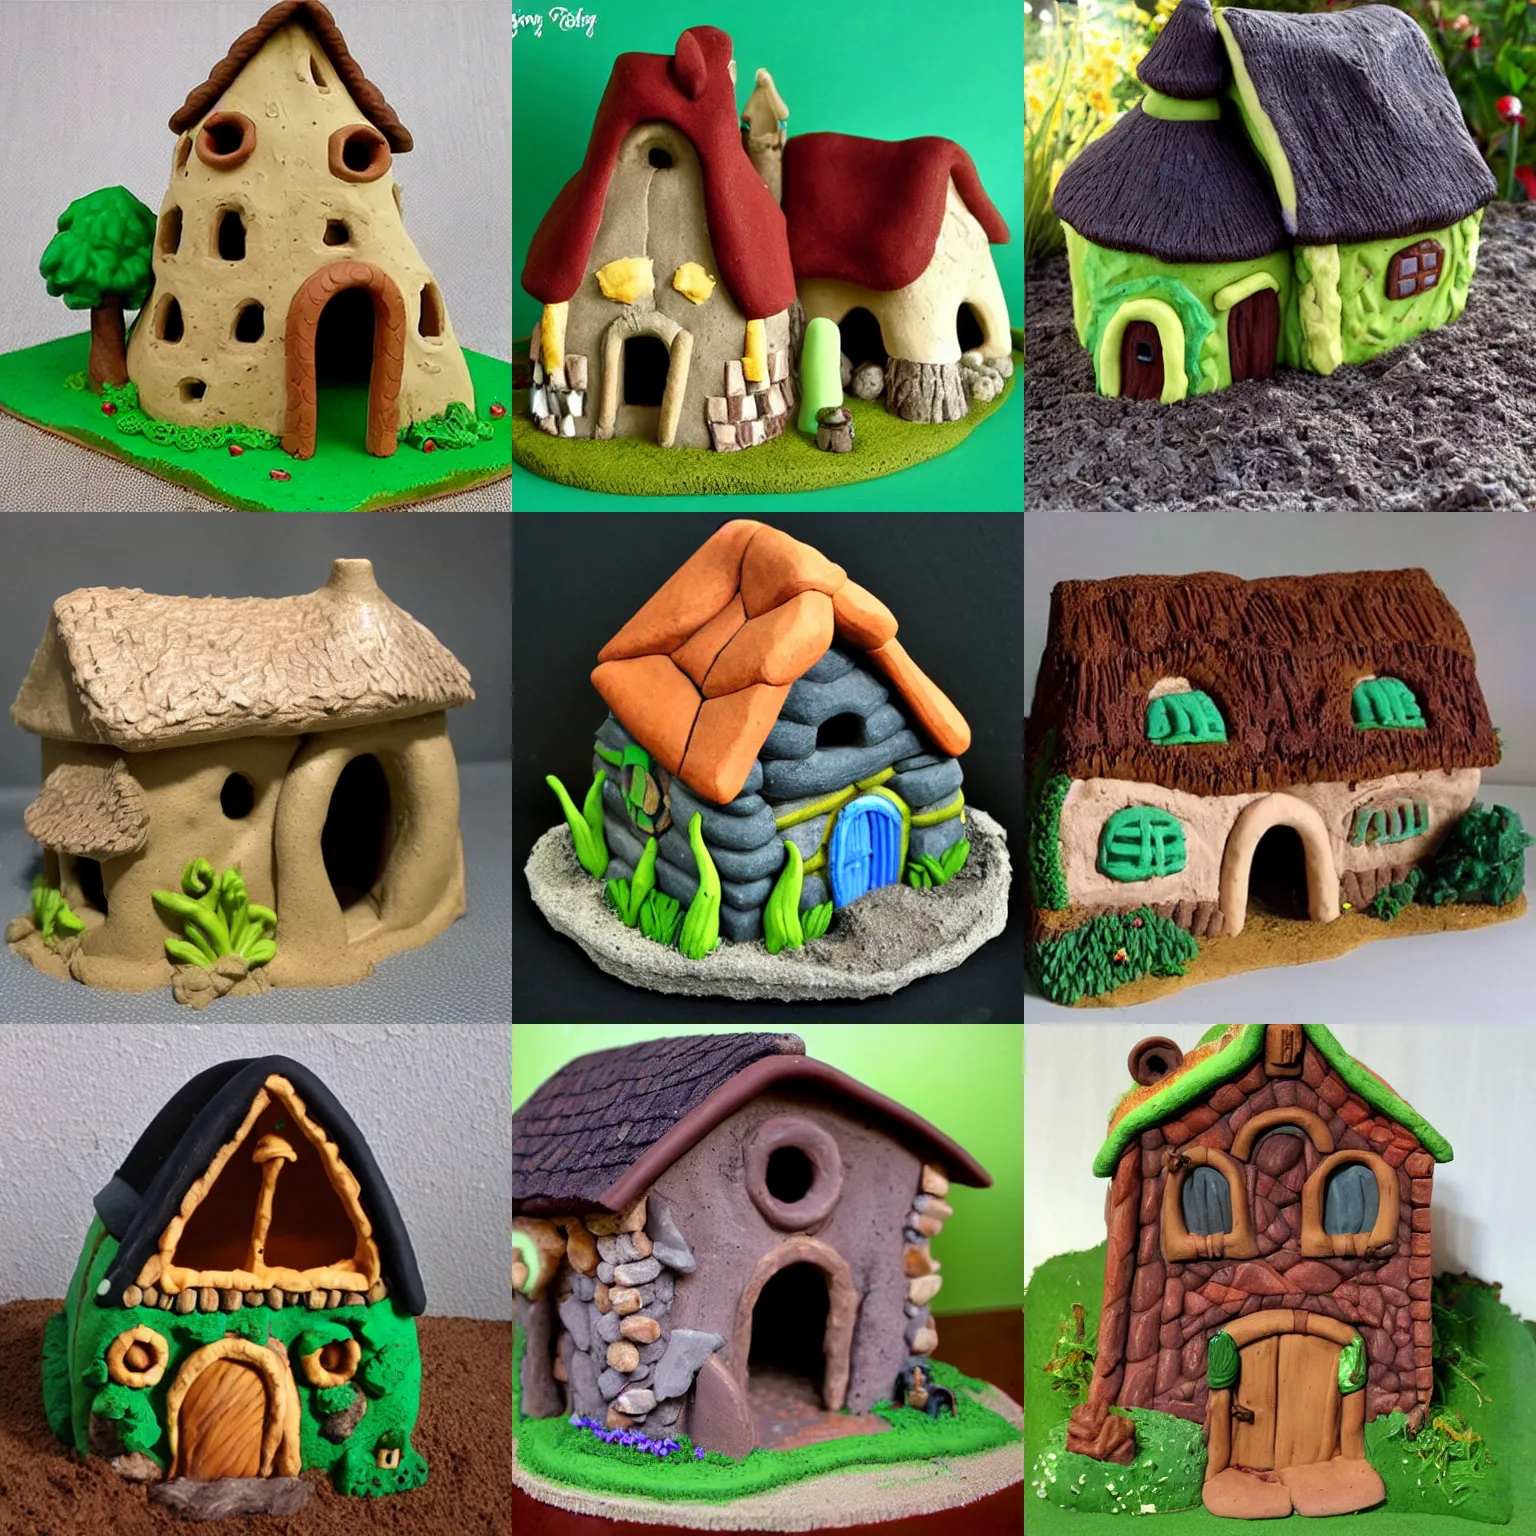 Prompt: fantasy cob house clay